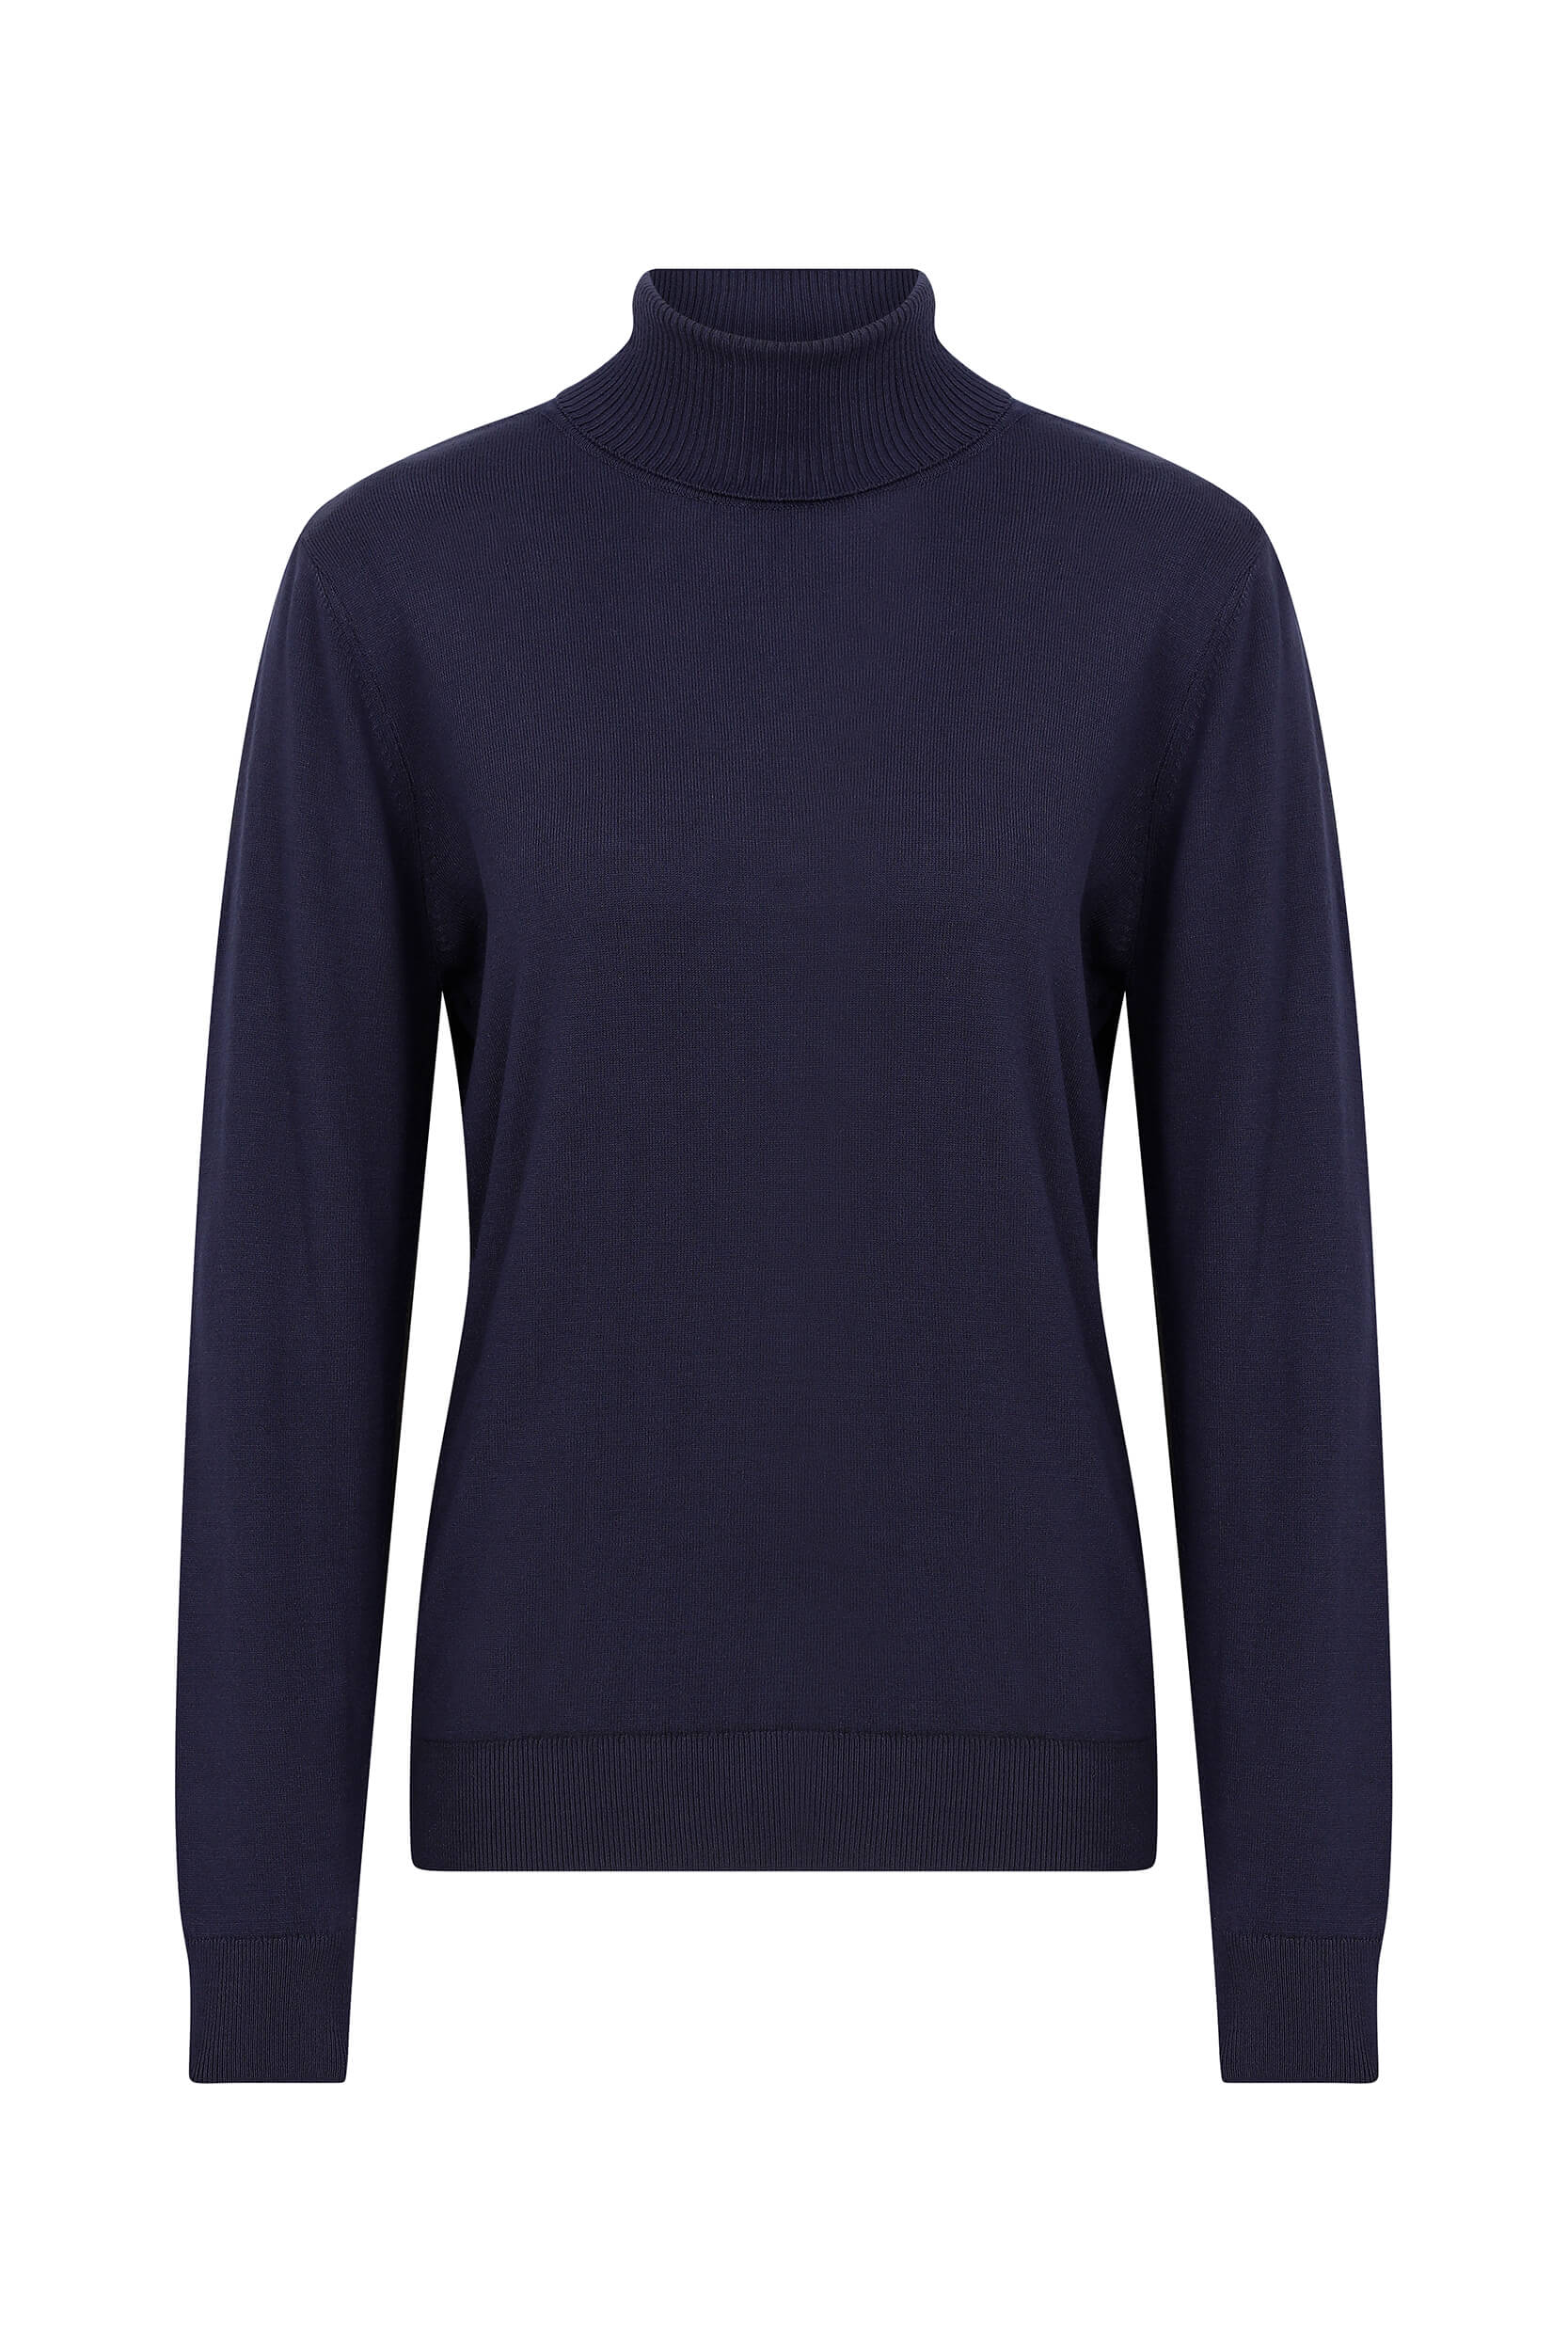 Roman Long Sleeve Turtleneck Sweater. 2